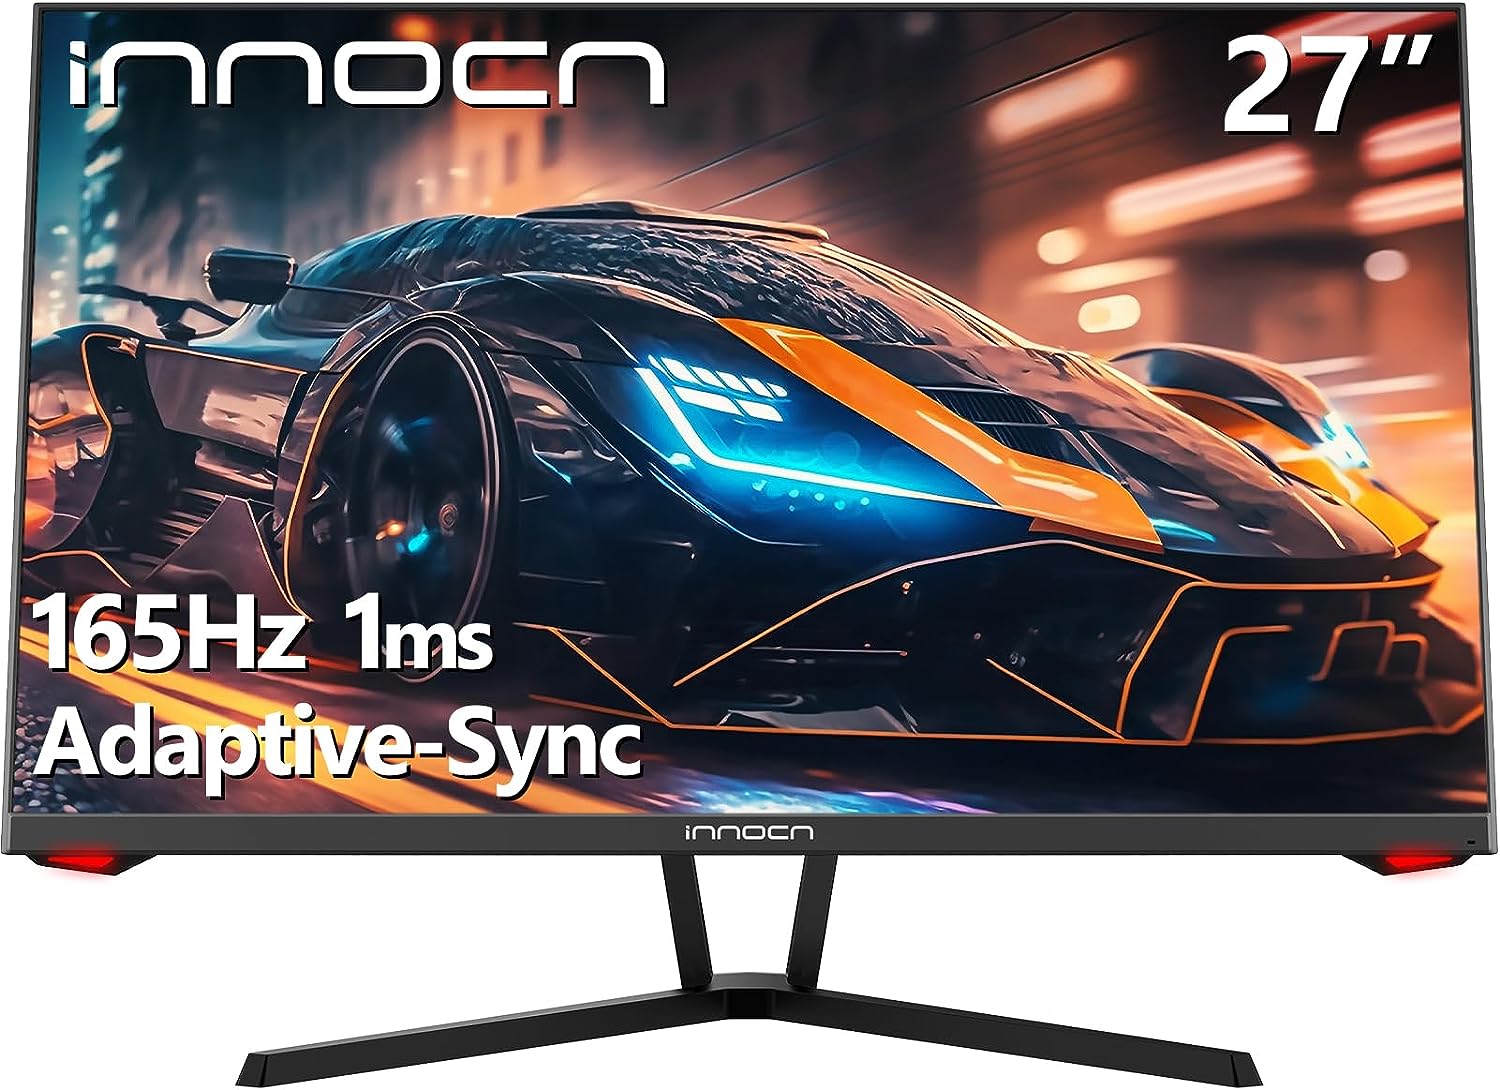 INNOCN 24.5 Gaming Monitor (Refurbished) - 25G1G